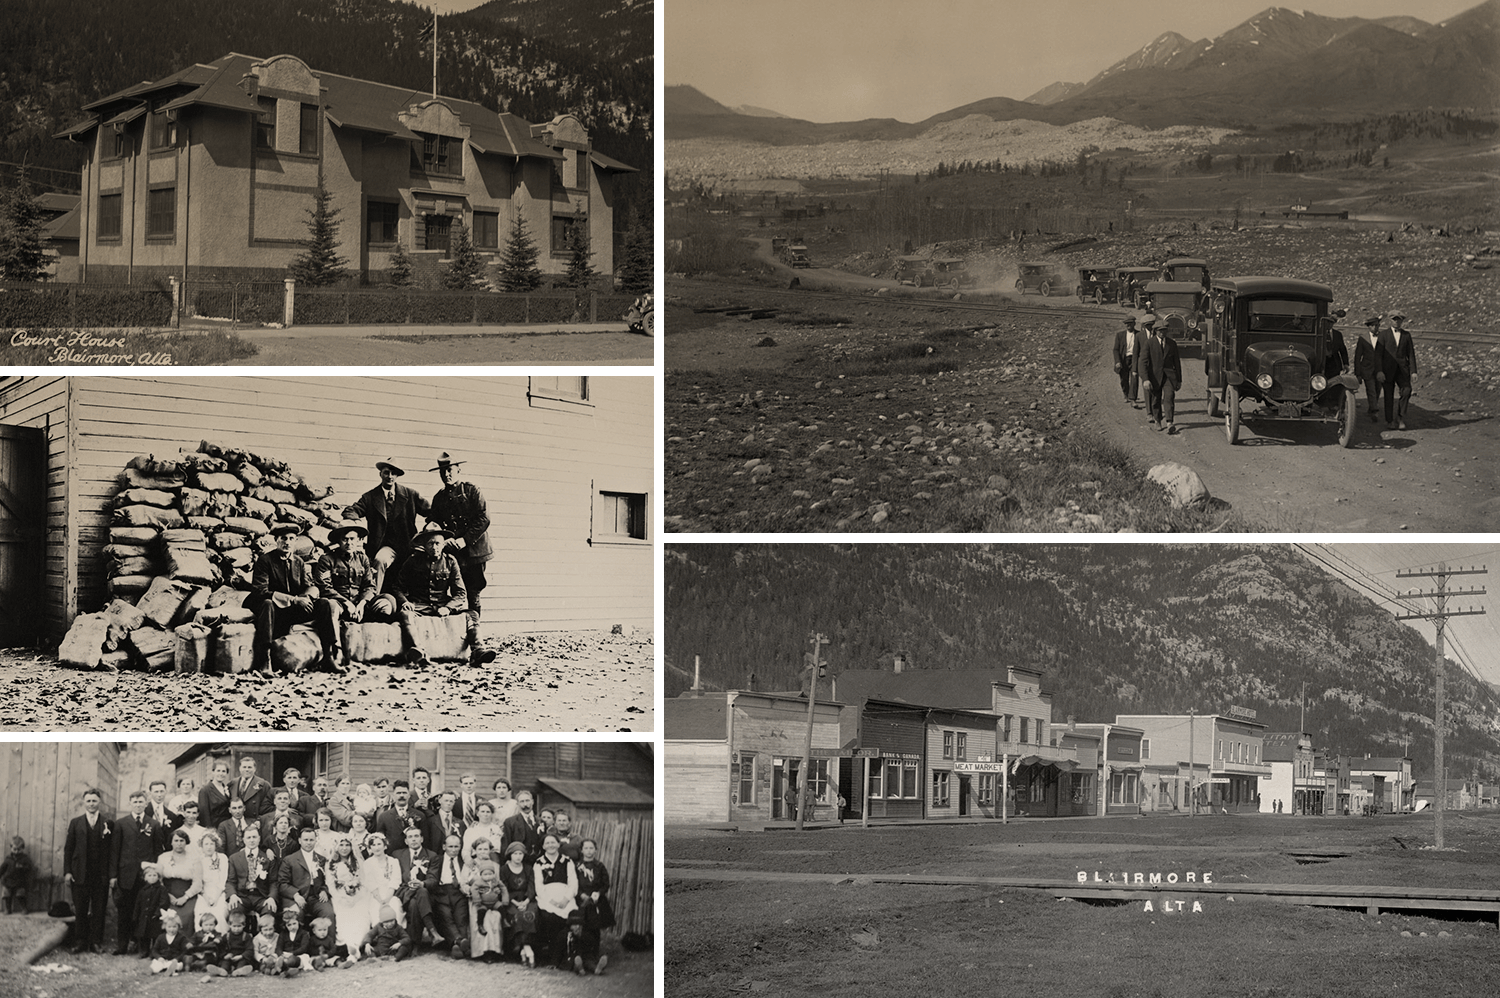 Collage of archival photos featuring Blairmore Alberta